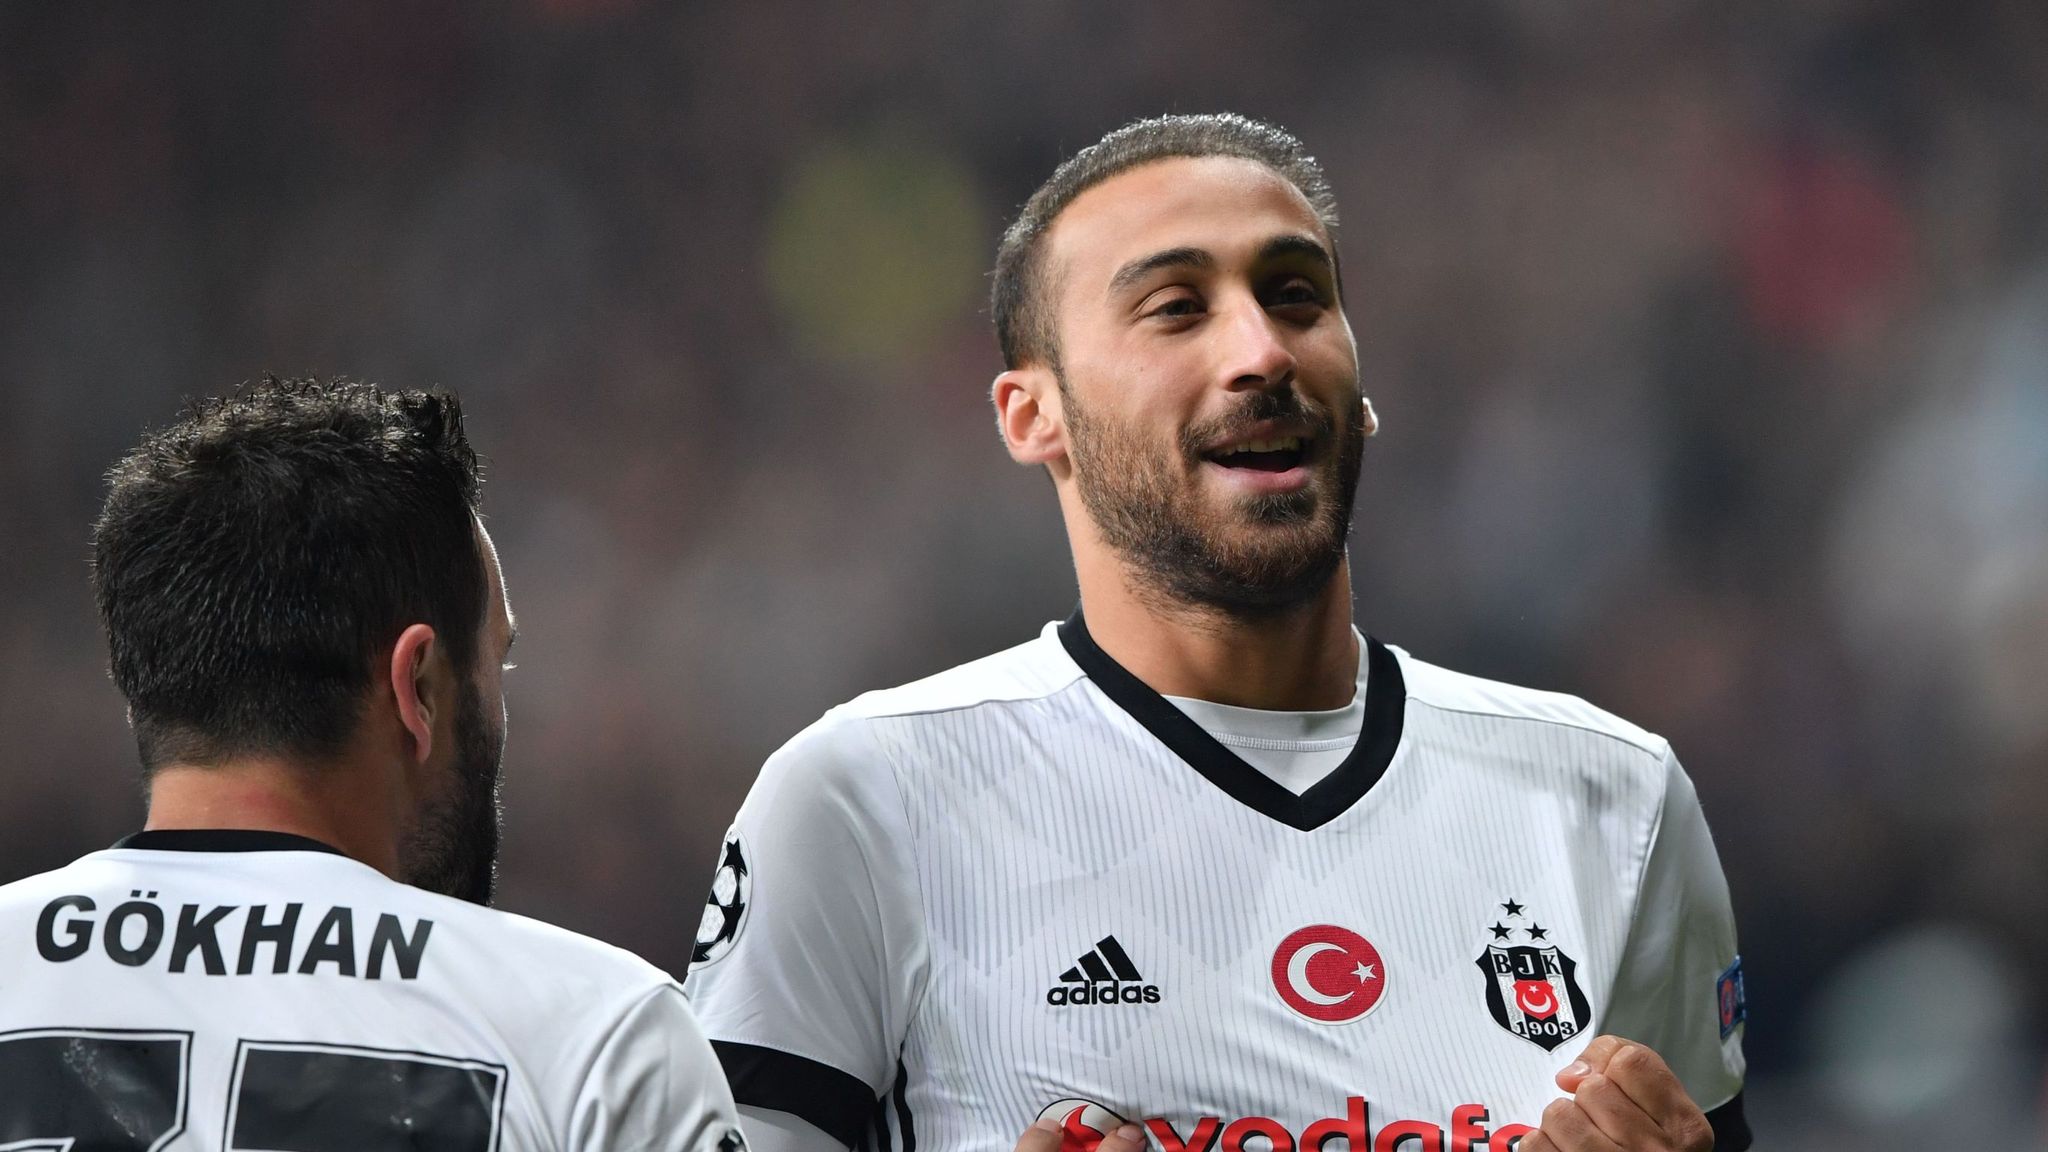 Besiktas clinch back-to-back Turkish titles - Eurosport